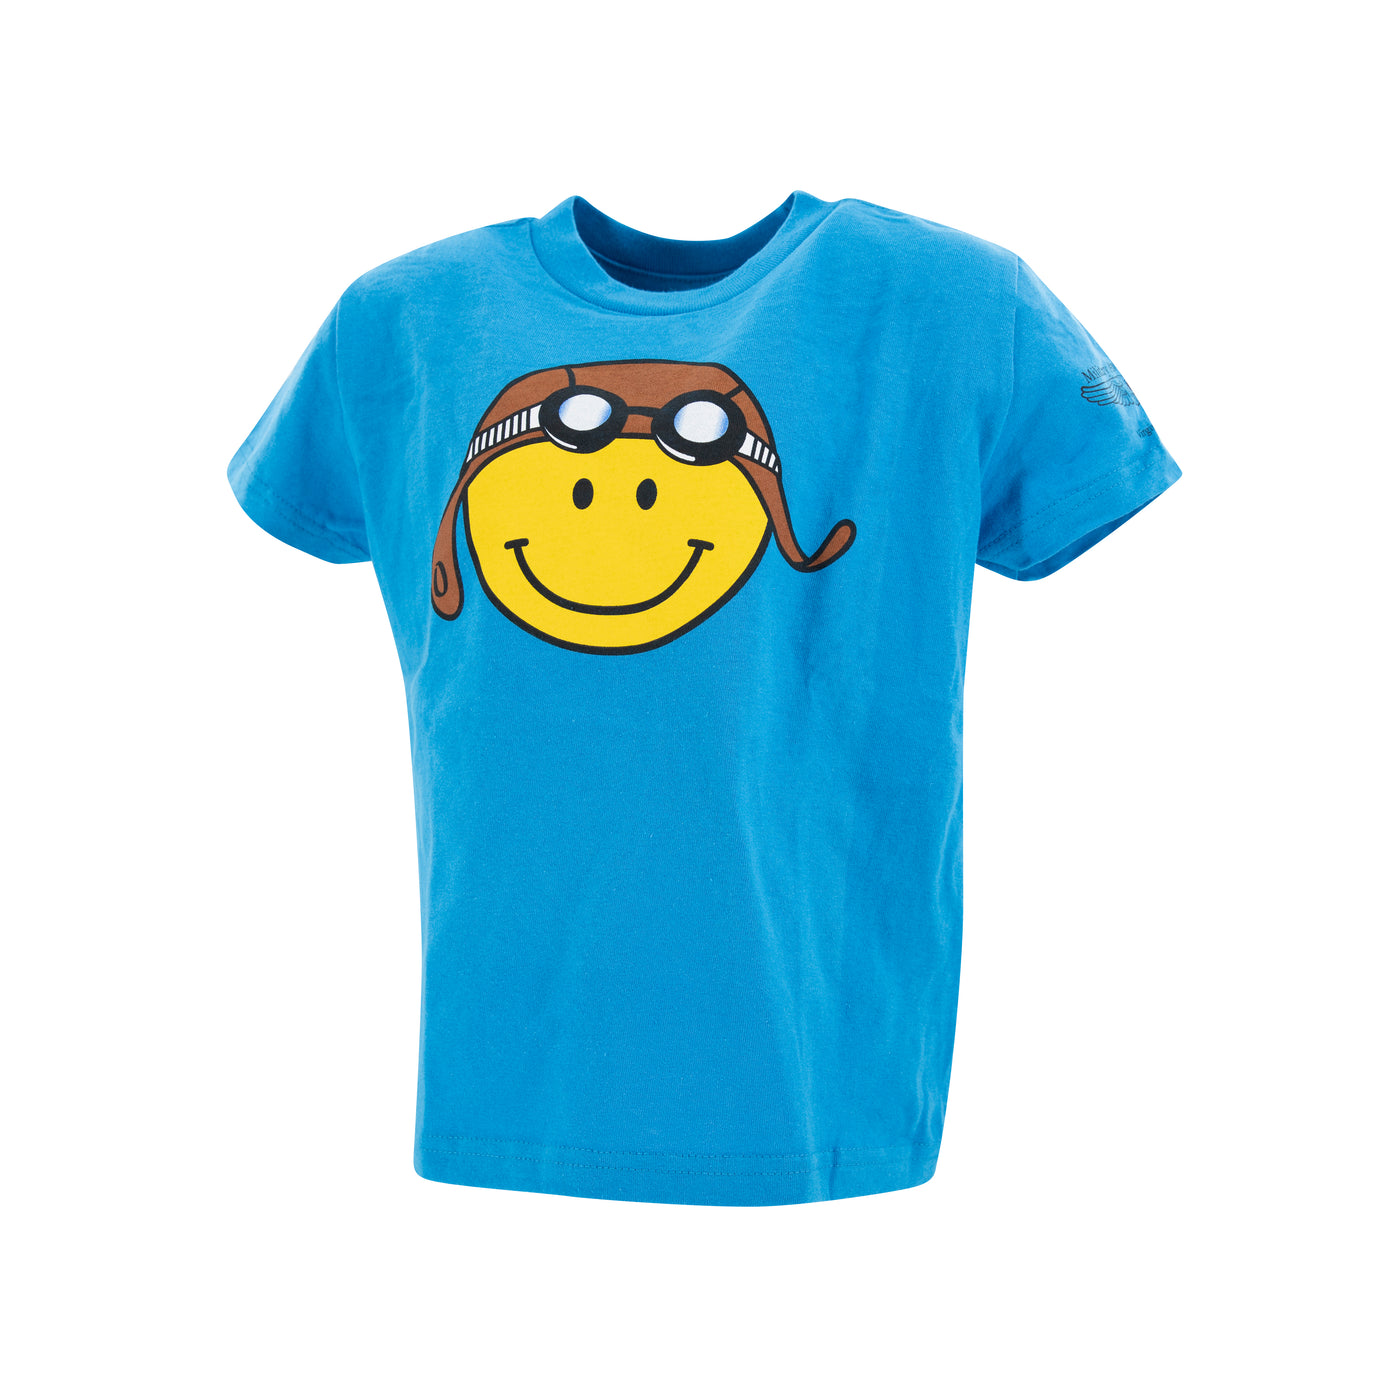 Toddler Smiley T-shirt